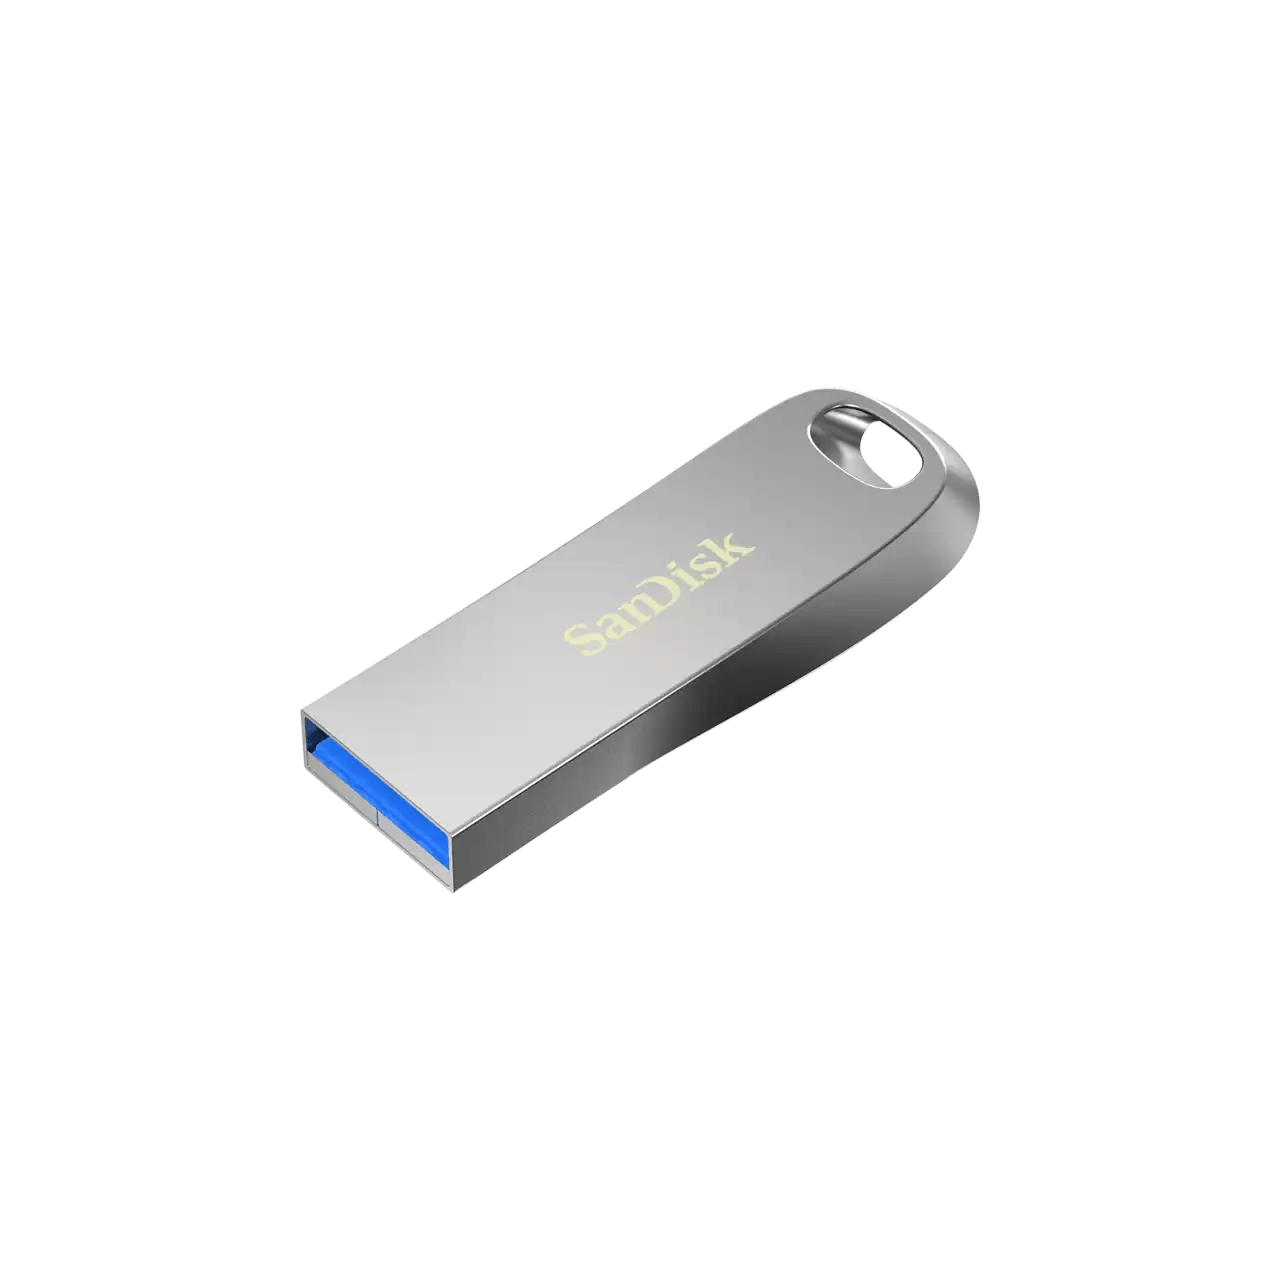 SanDisk 256GB Ultra Luxe USB 3.1 隨身碟 (SDCZ74 - 256G - G46) - Fever Electrics 電器熱網購平台